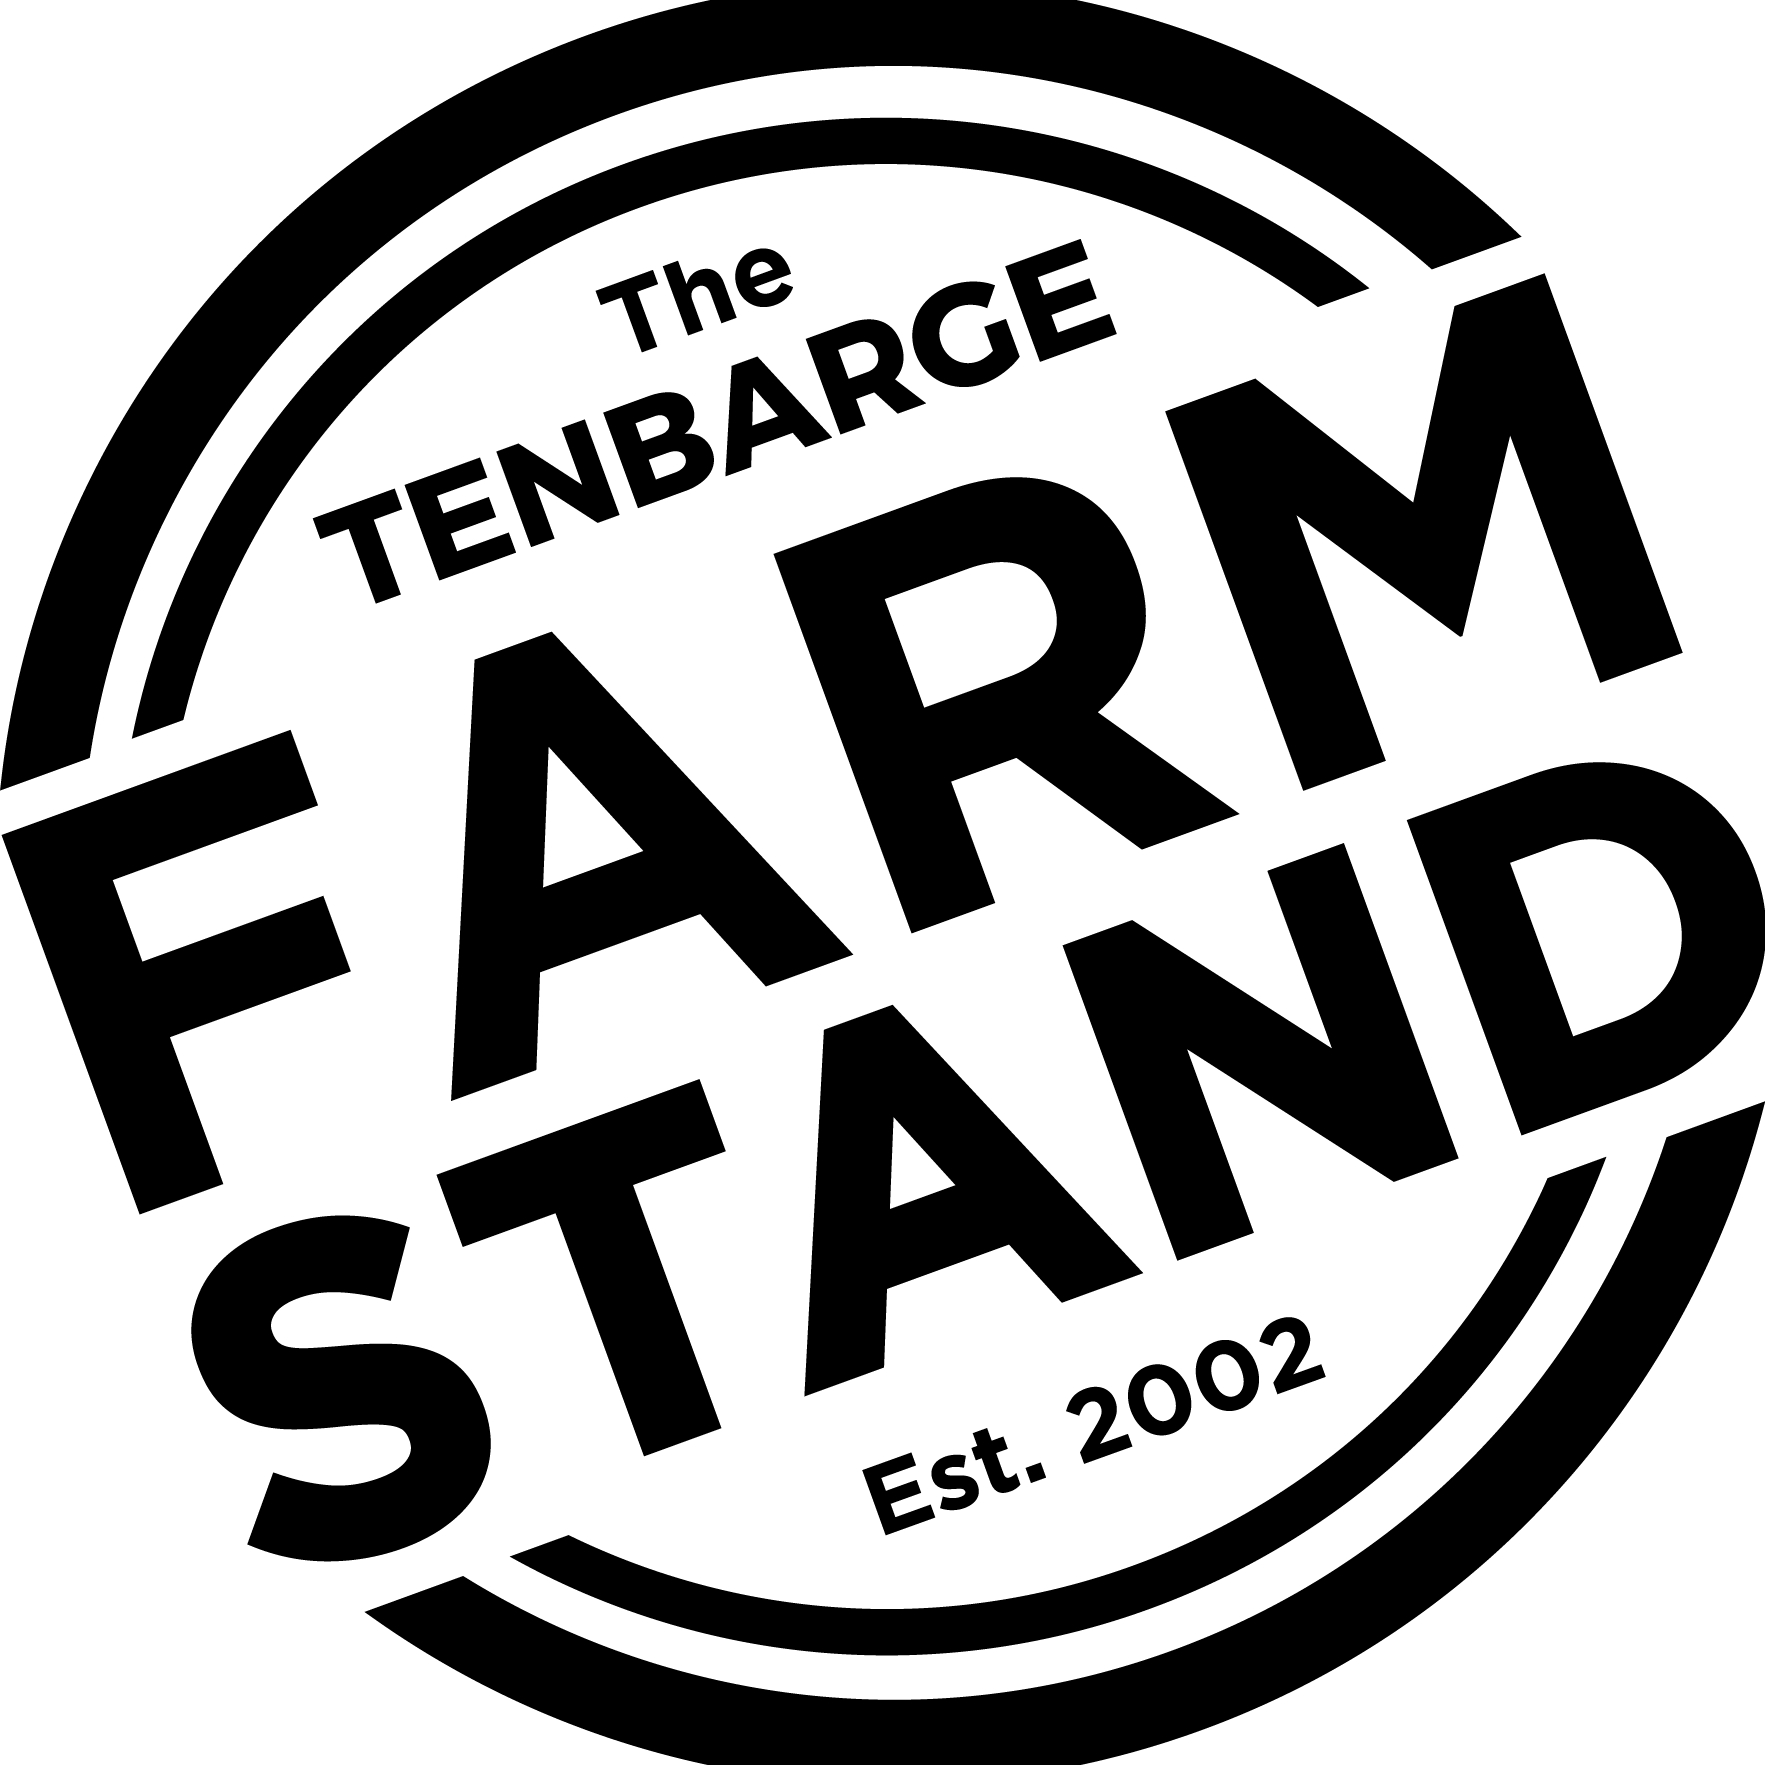 The Tenbarge Farm Stand